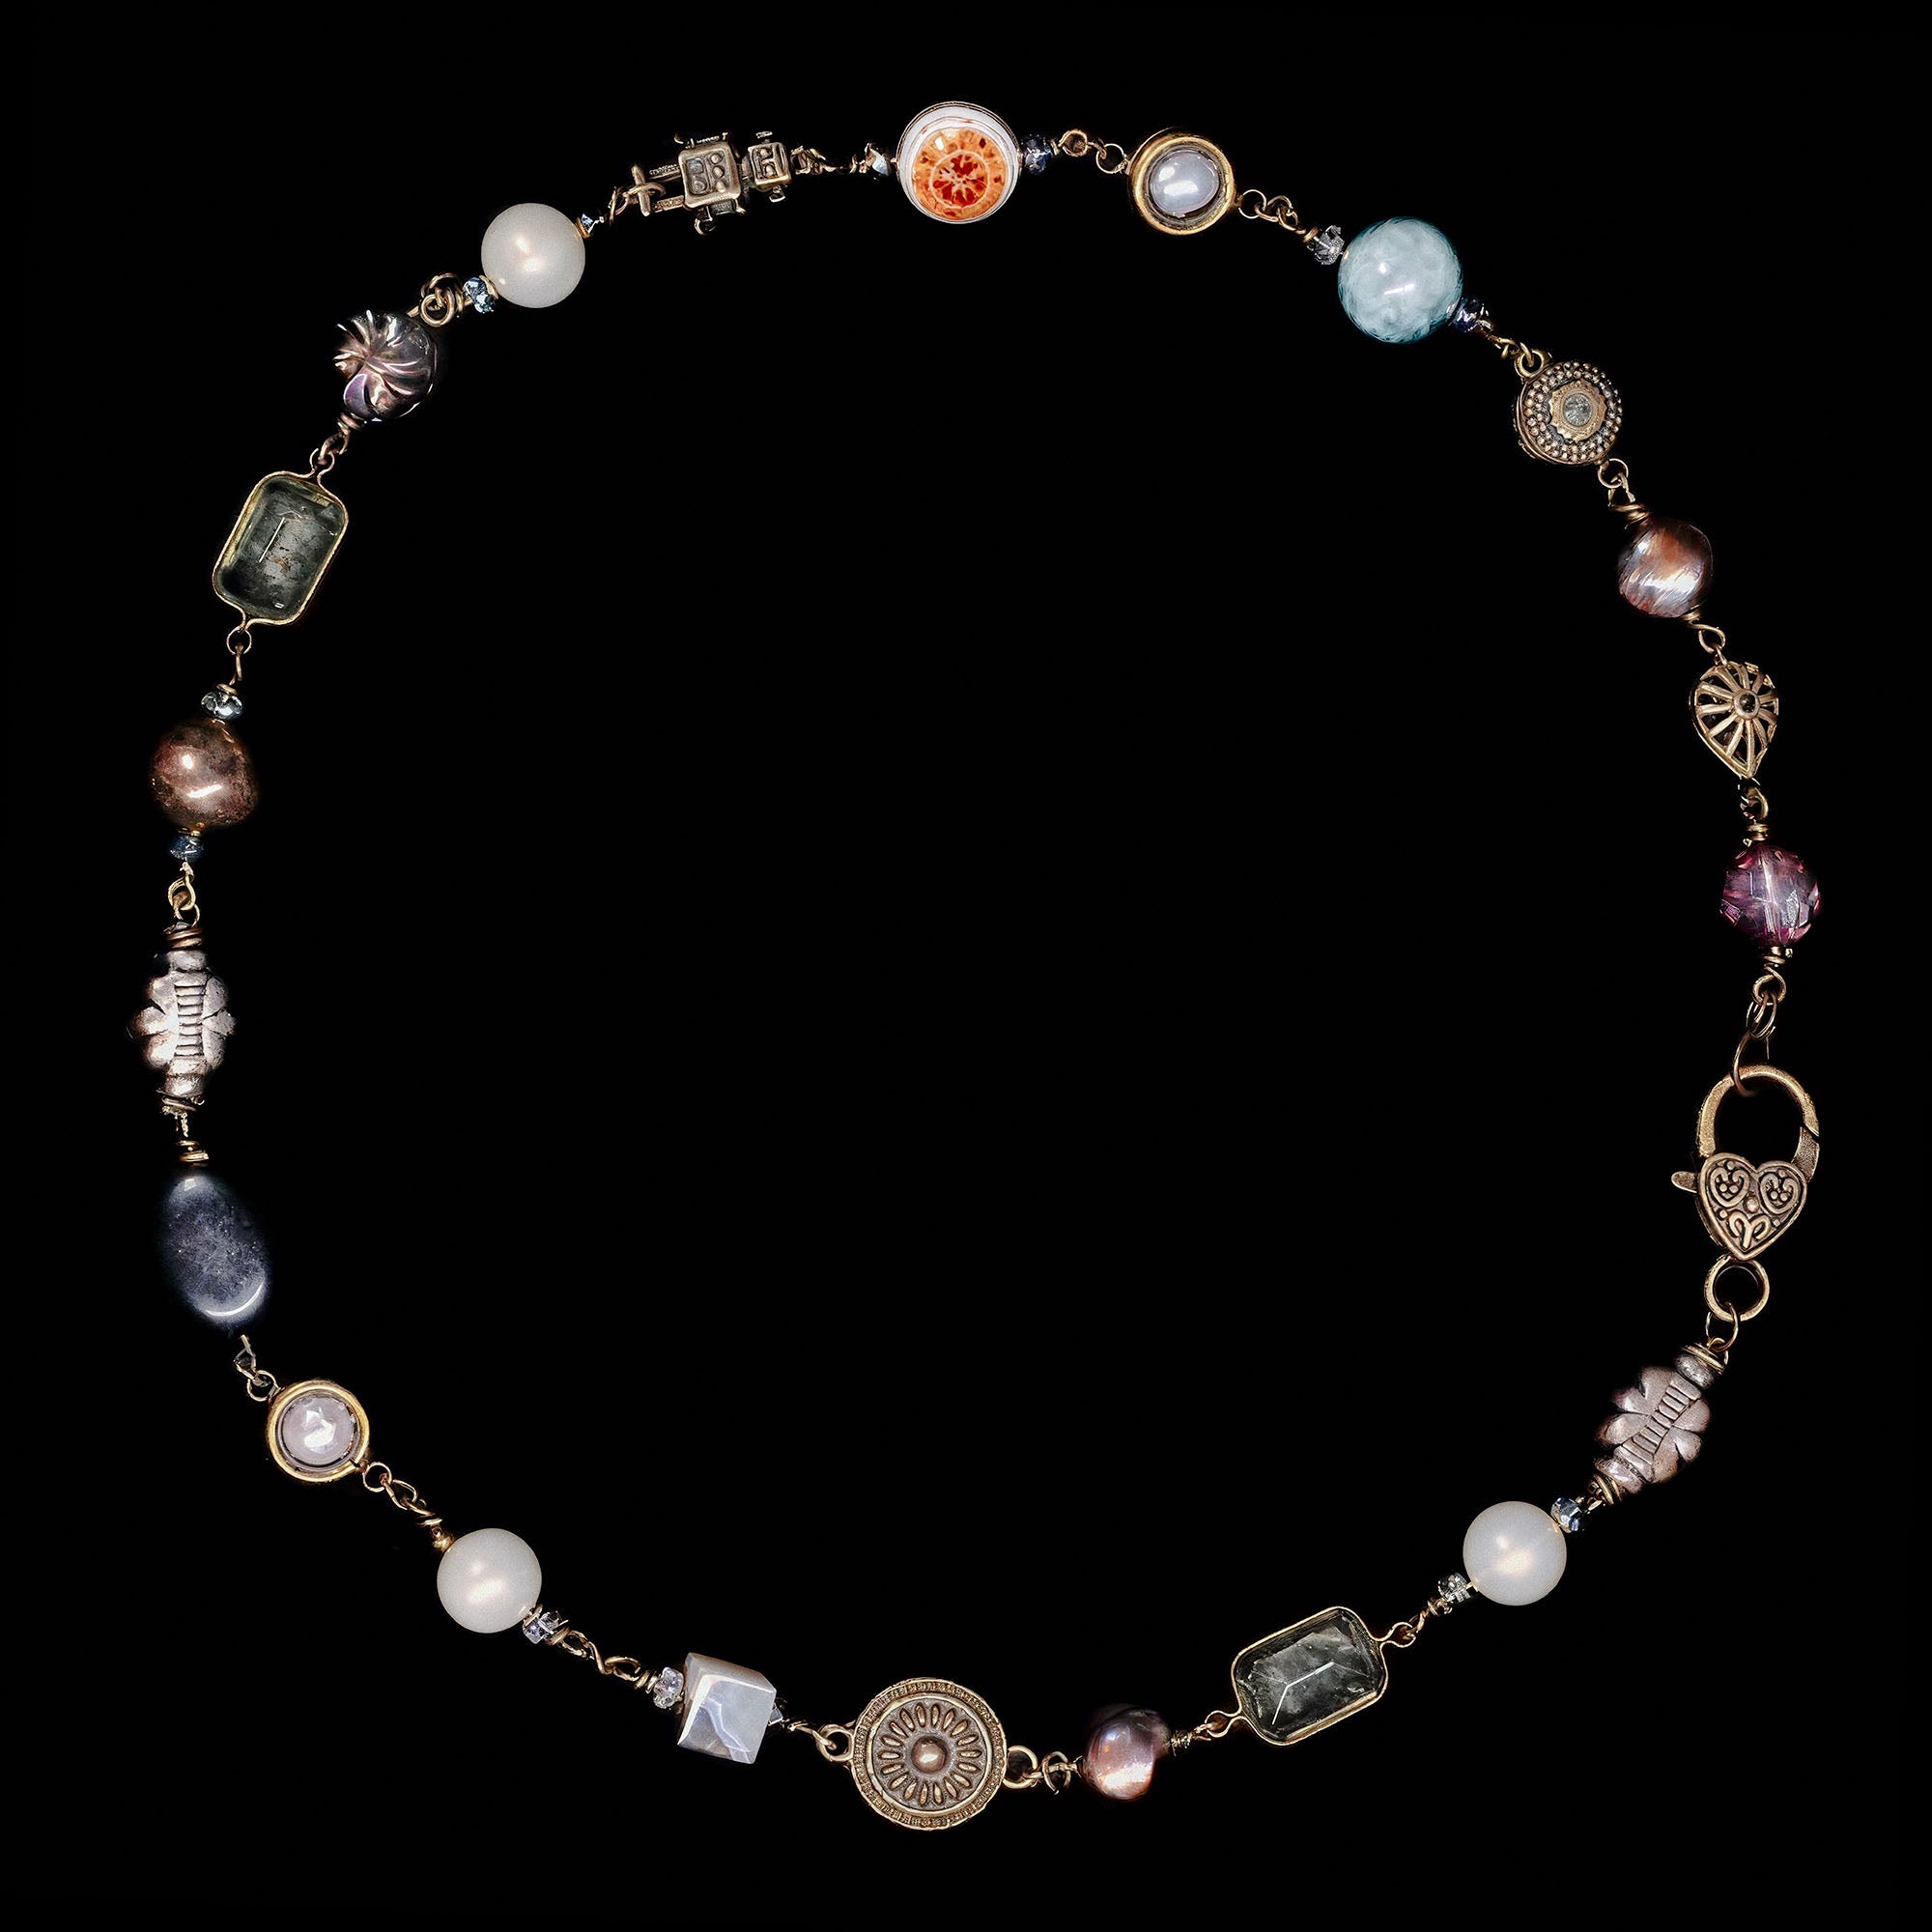 Custom Luxury Necklace with Precious Gemstones and Freshwater Pearls - SURREALIUM